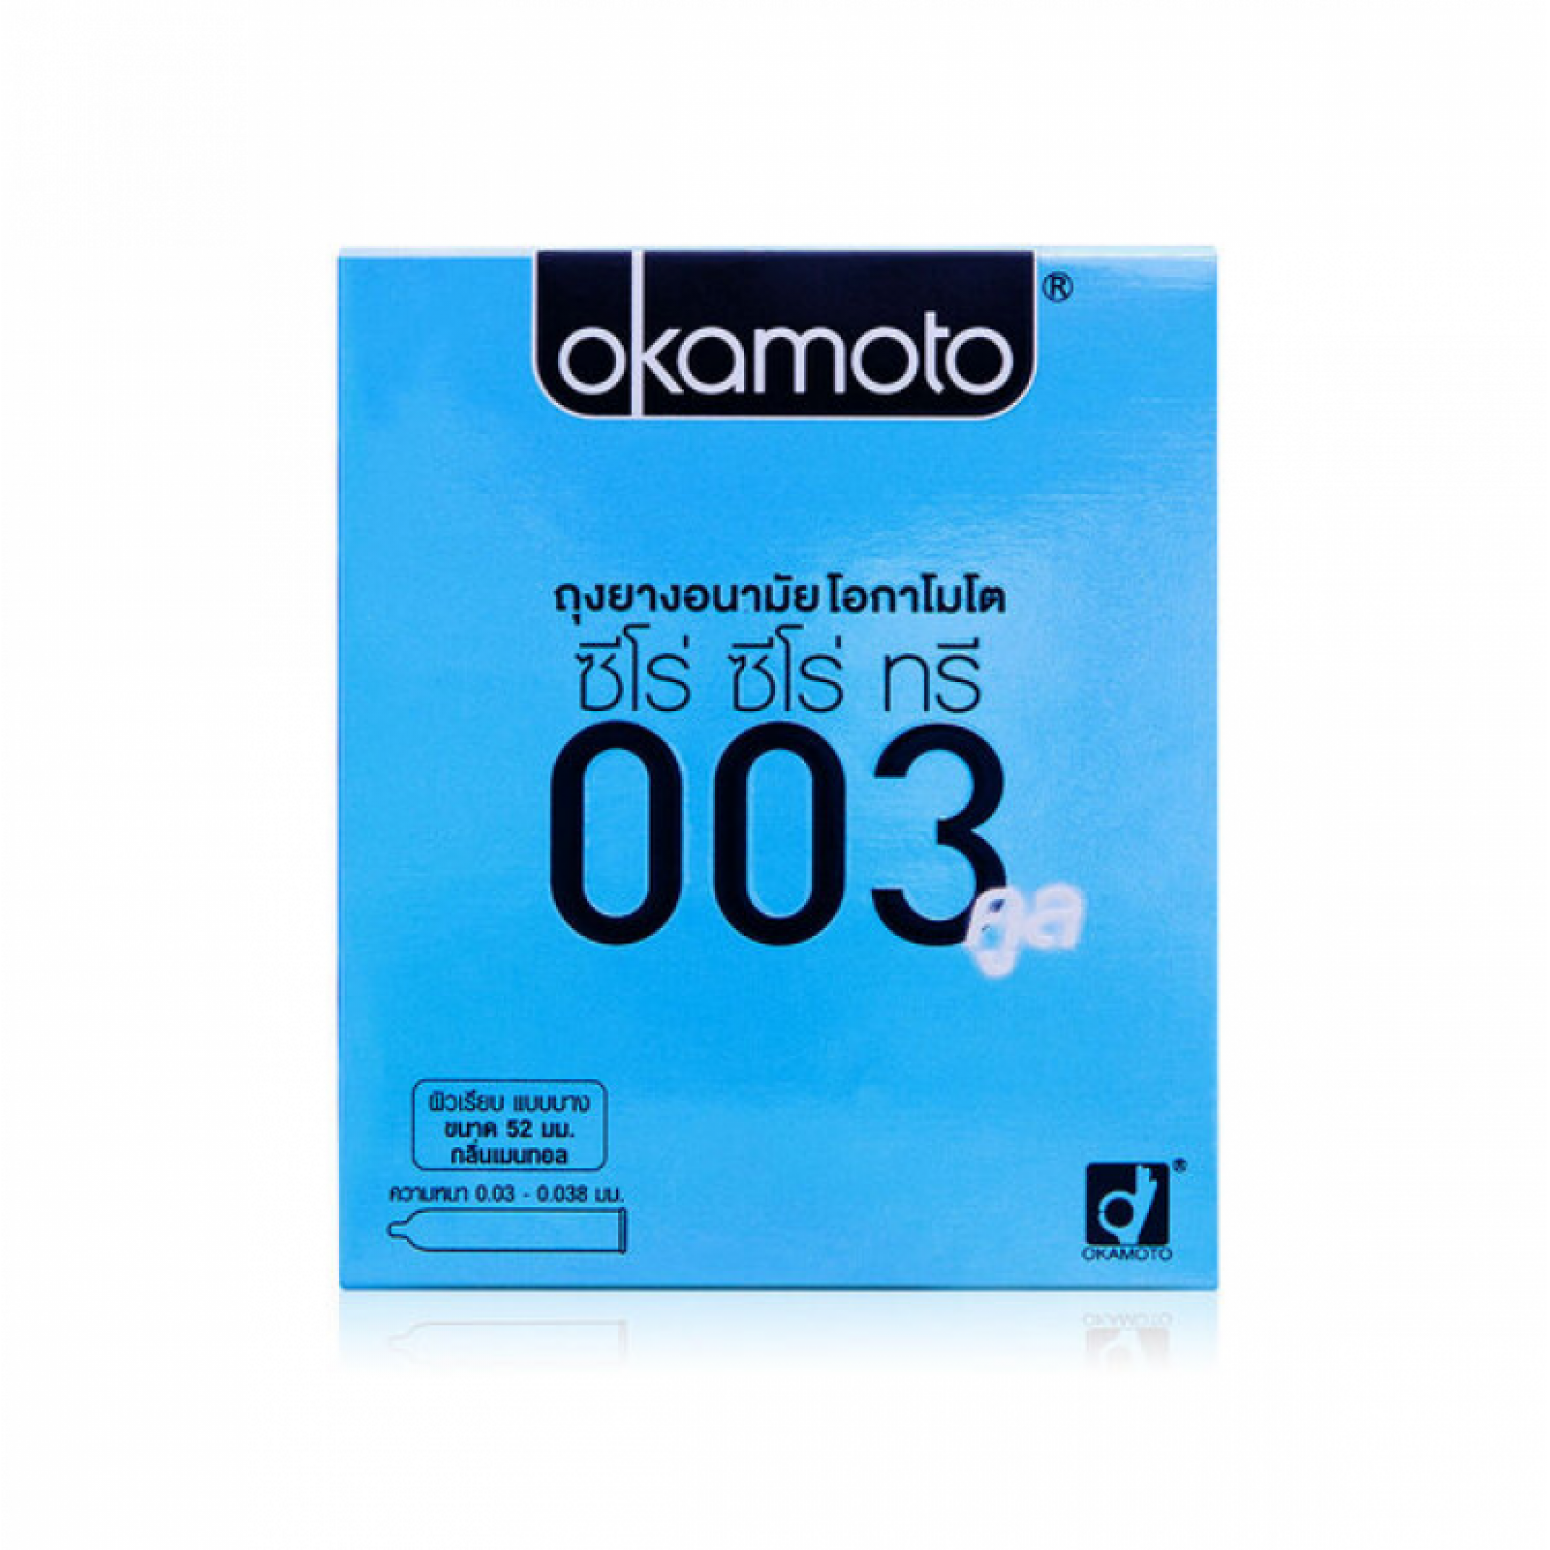 Okamoto 003 Cool Condom